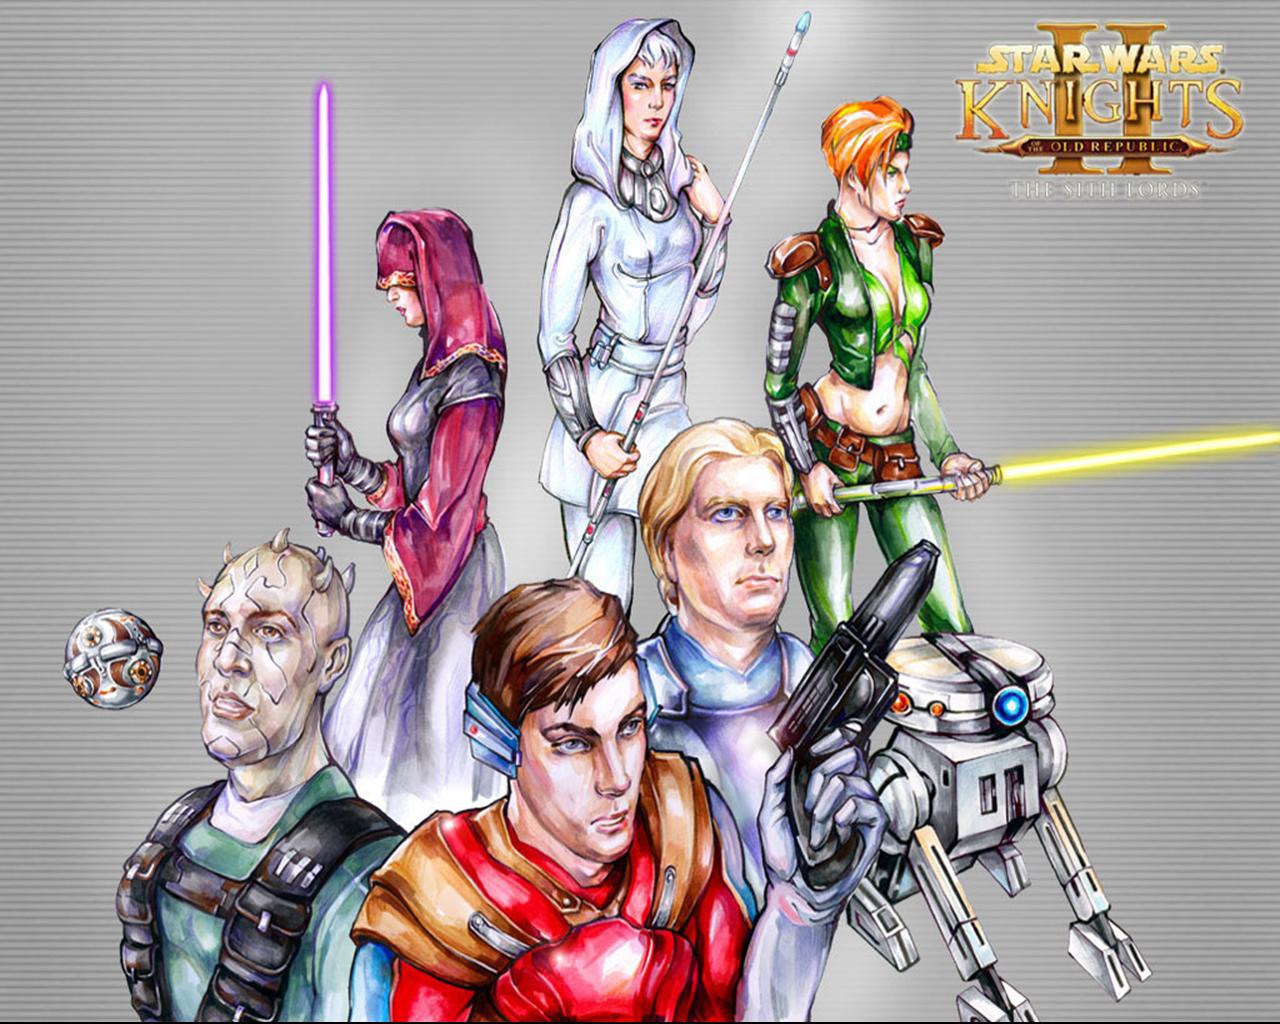 Foton Star Wars Star Wars Knights of the Old Repub Datorspel spel dataspel